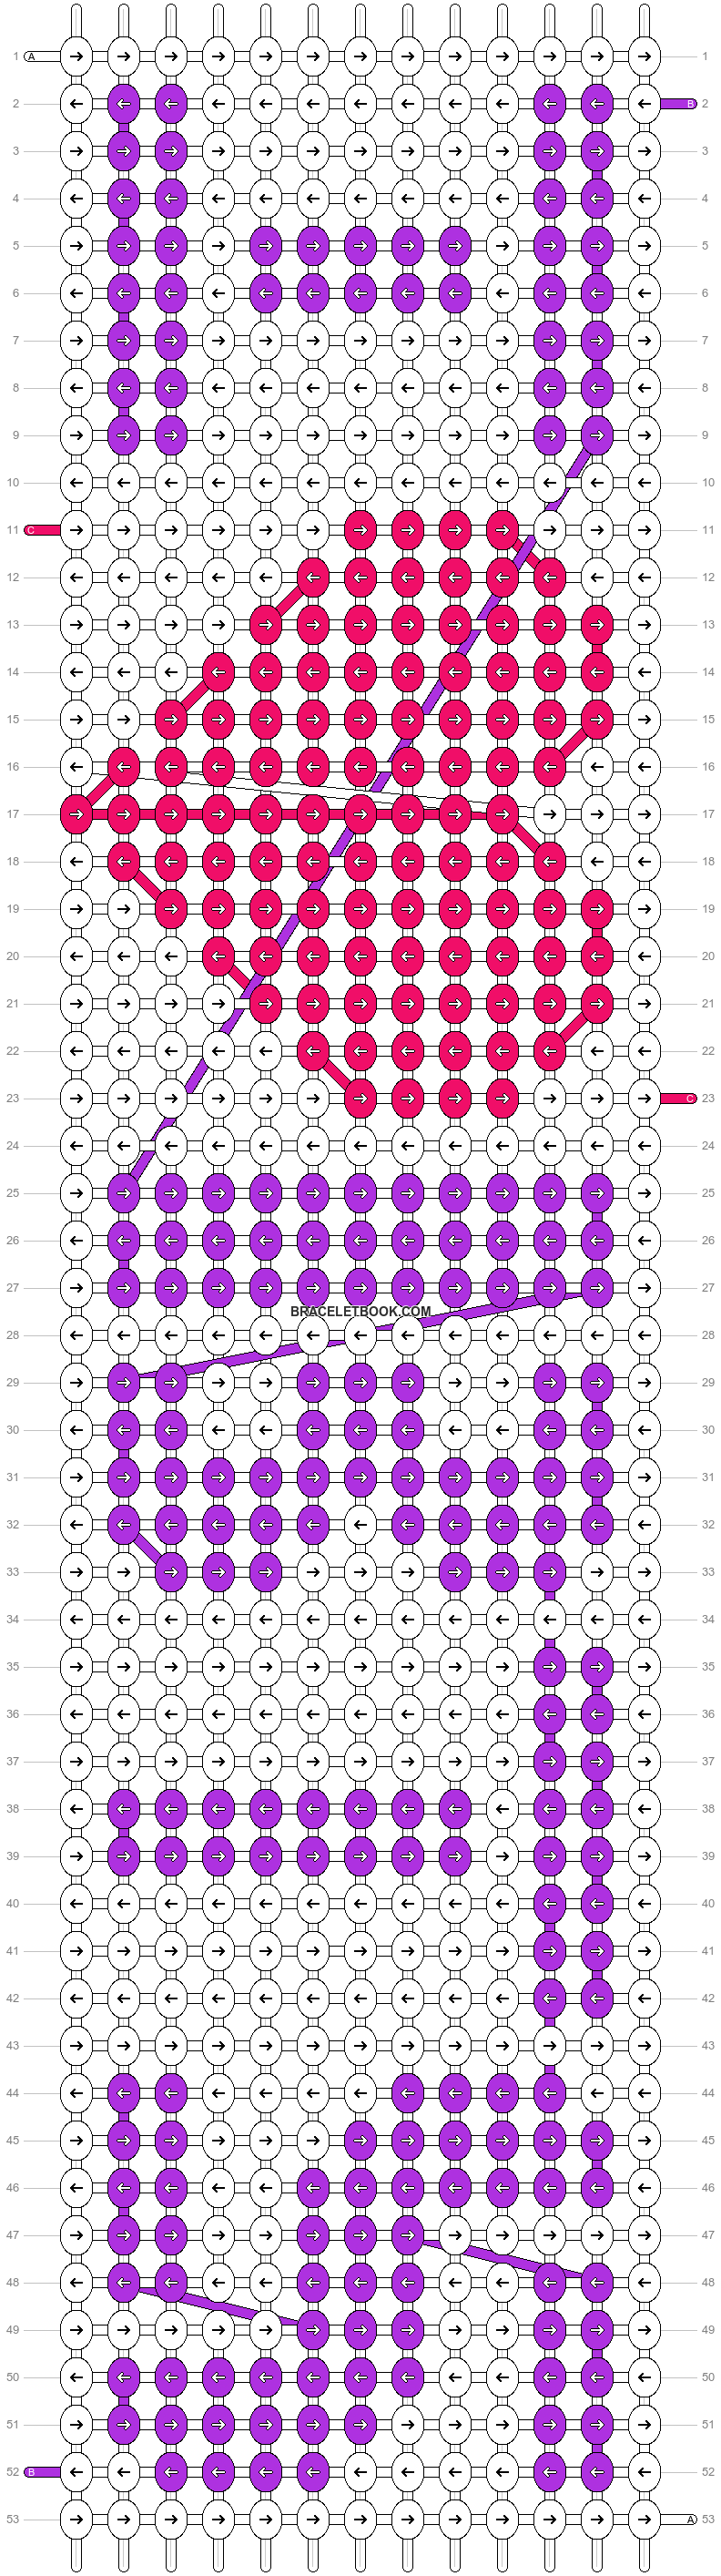 Alpha pattern #18455 variation #15108 pattern